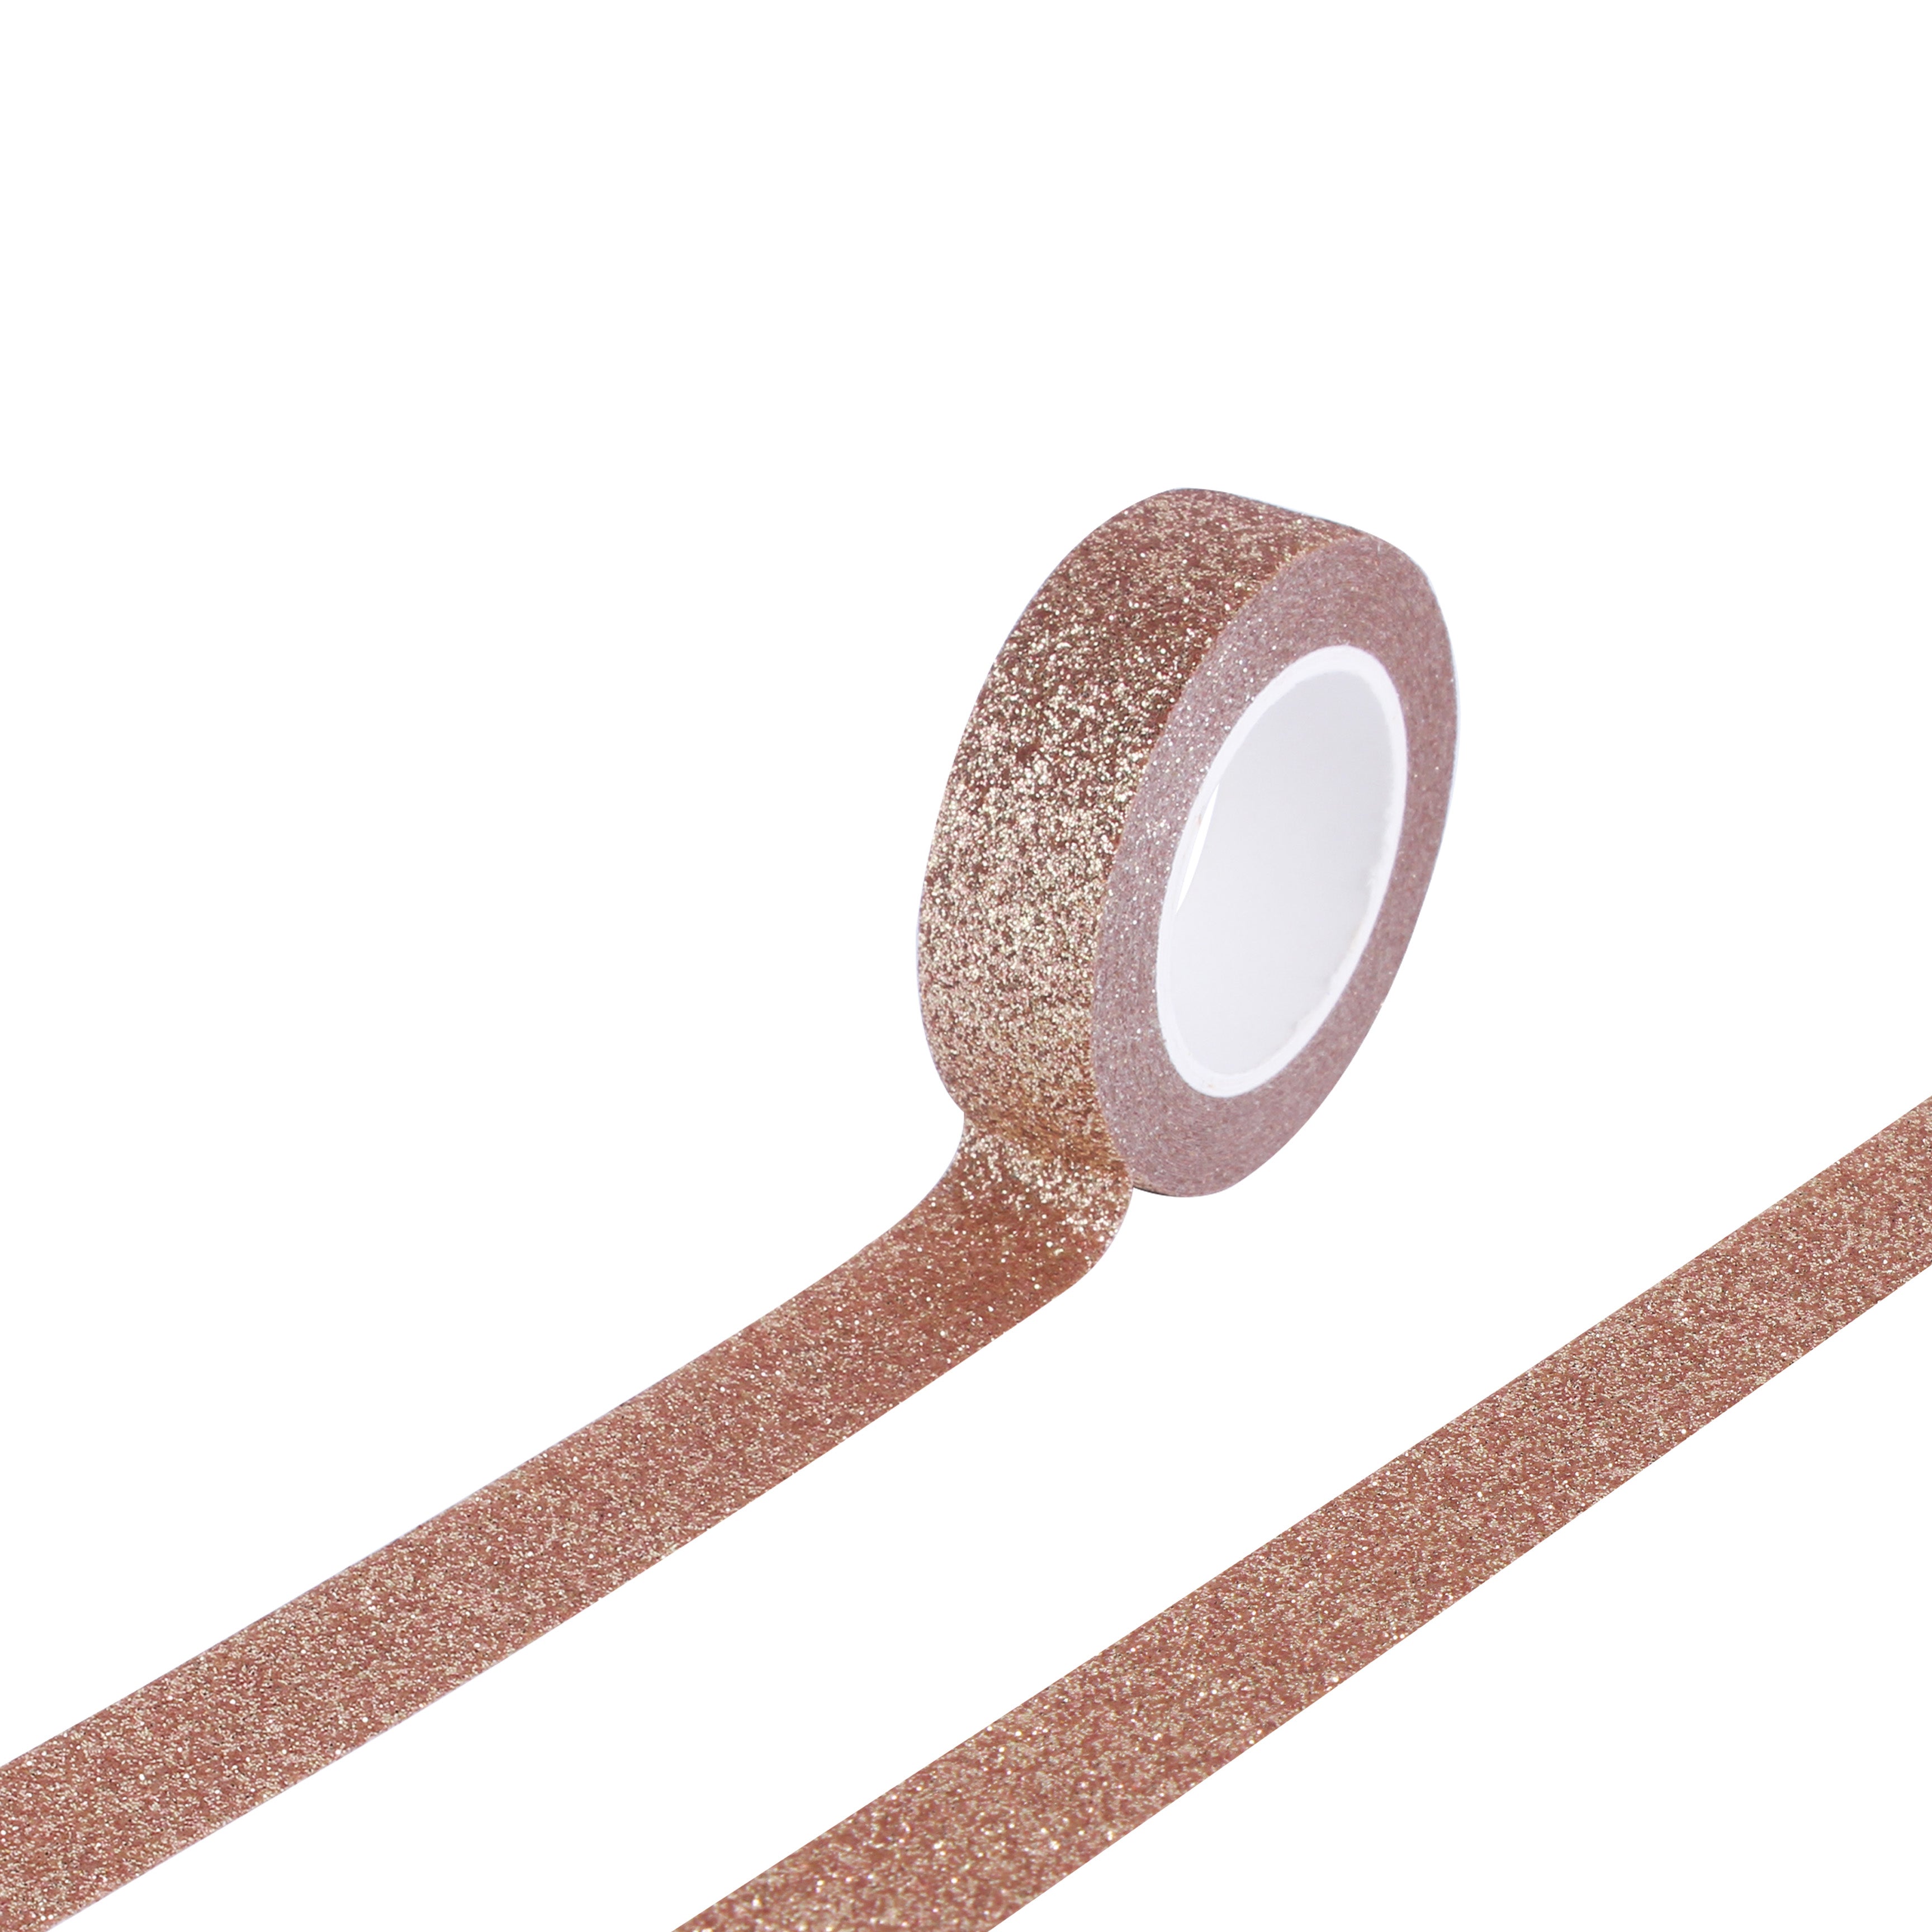 Washi Tape- Chocolate Glitter, 15mm x 5mtr